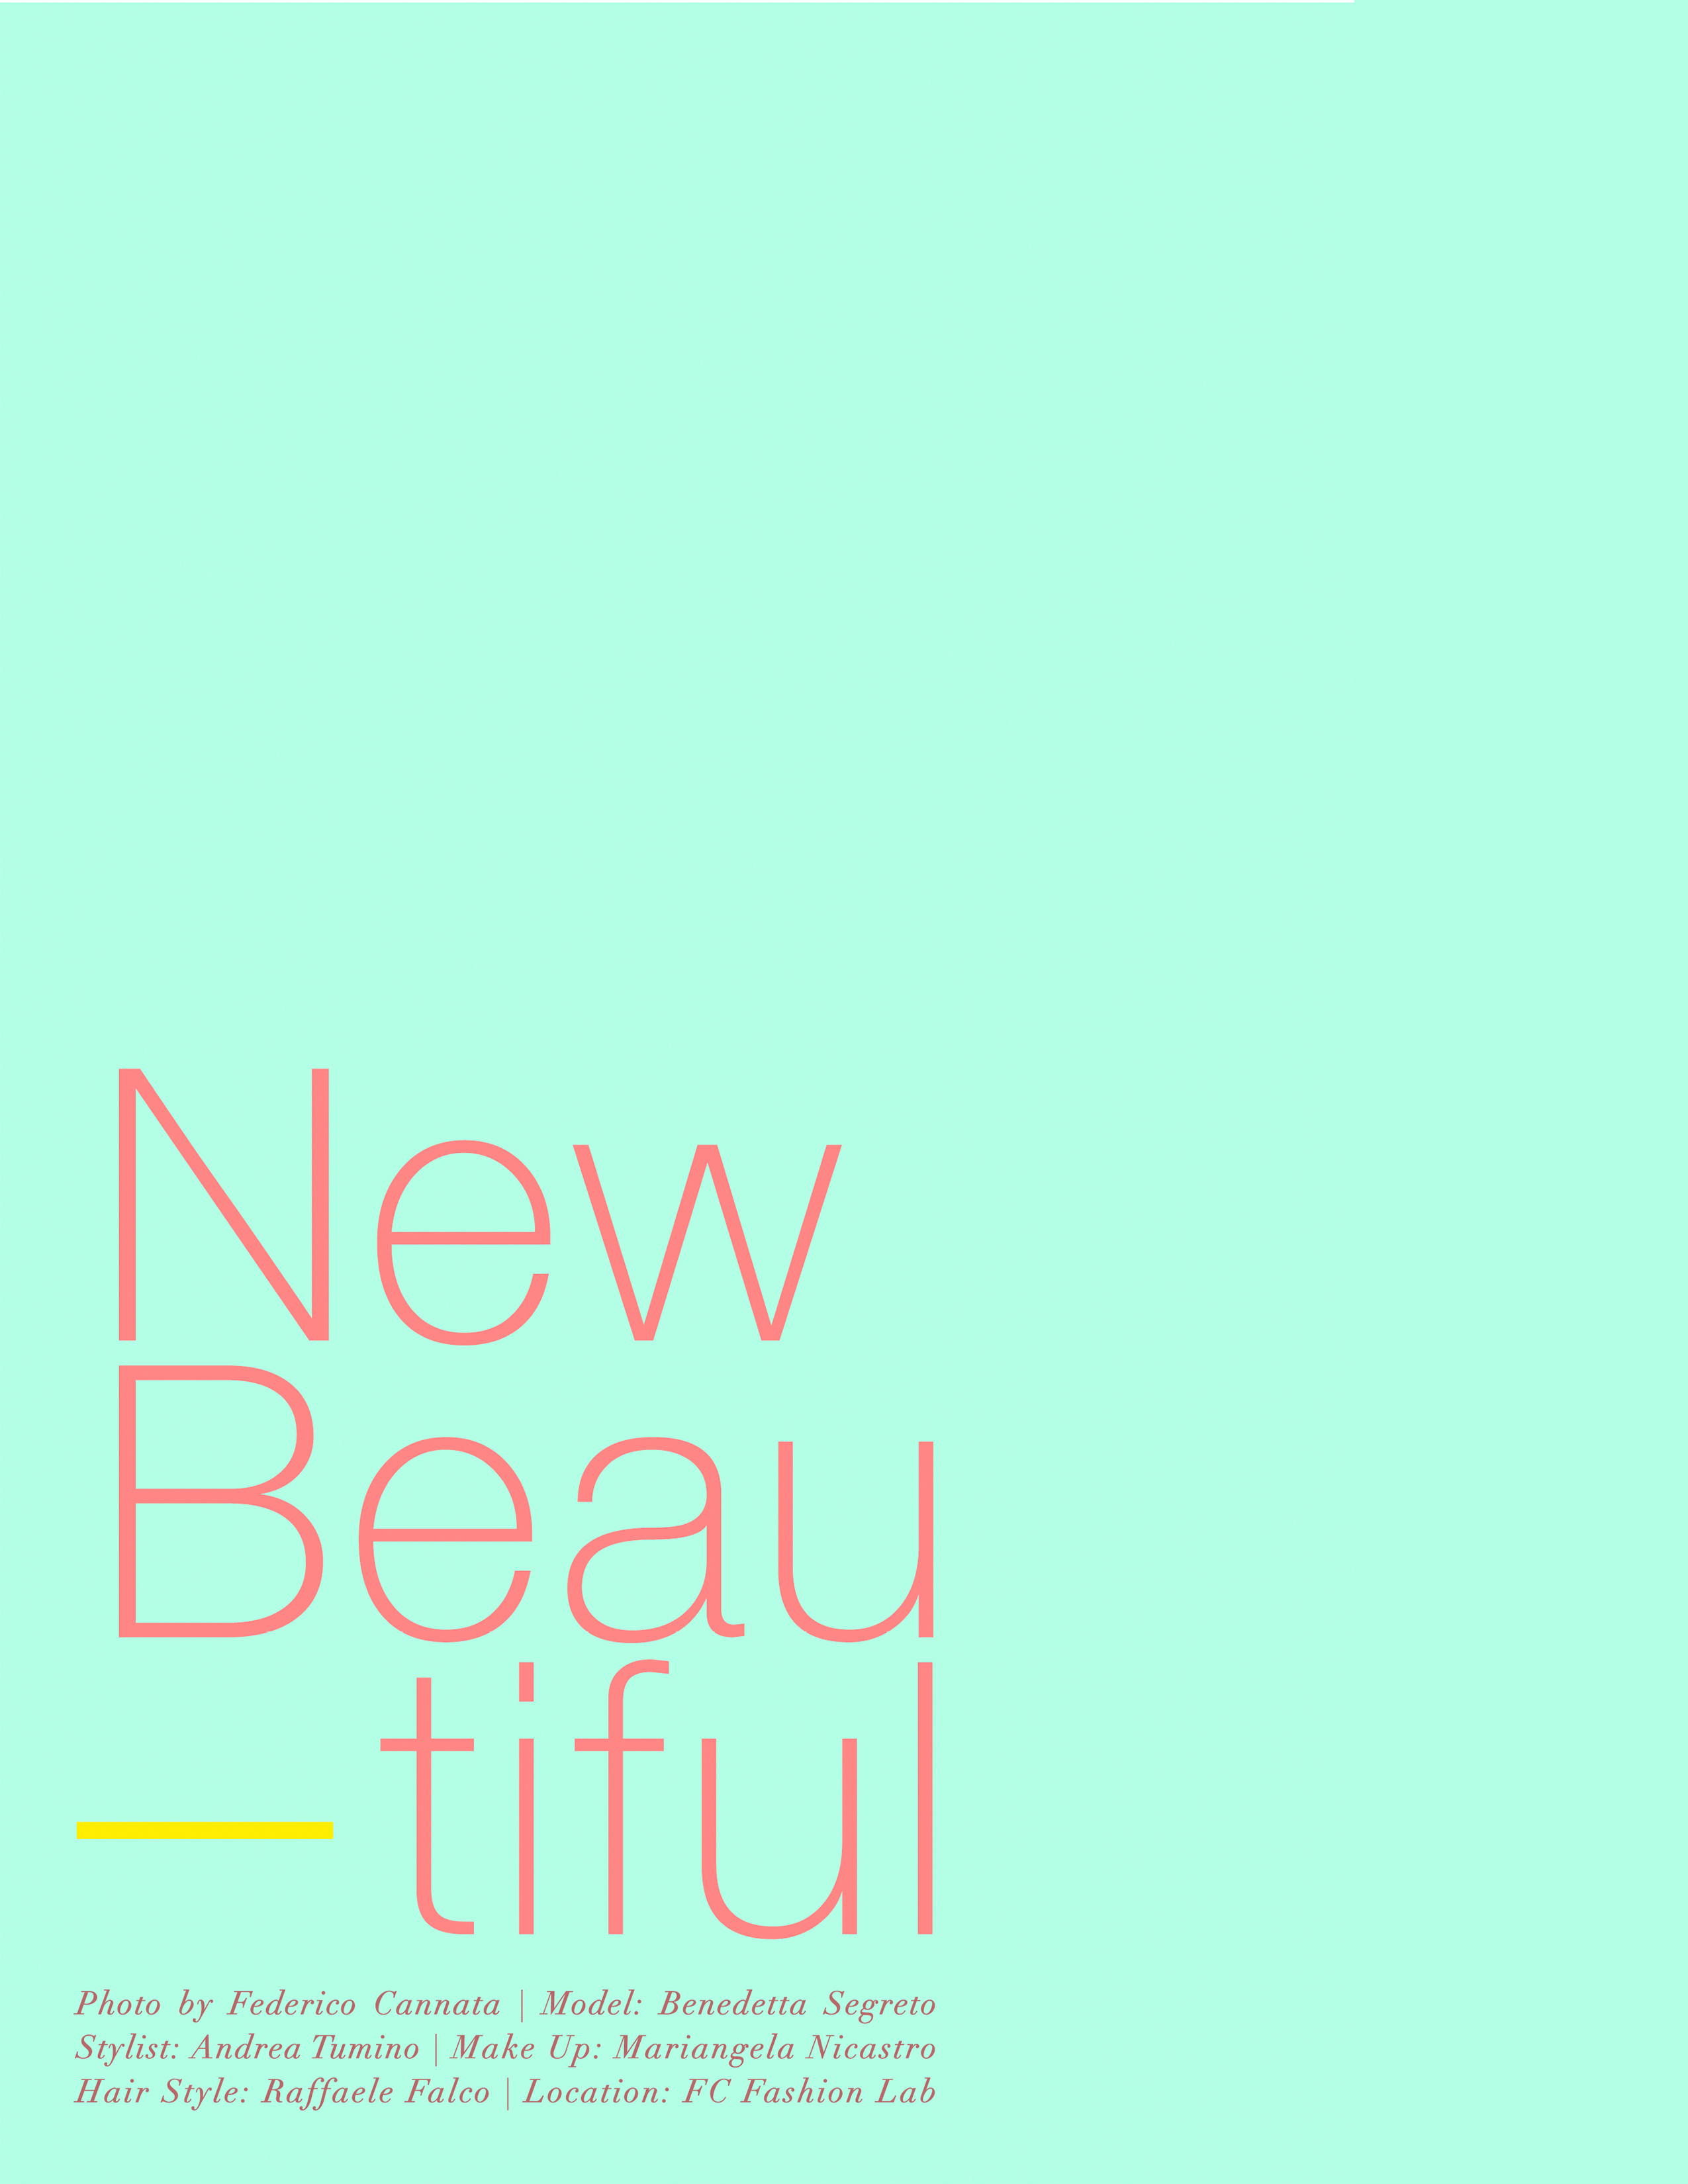 New Beautiful - Editorial by Federico Cannata